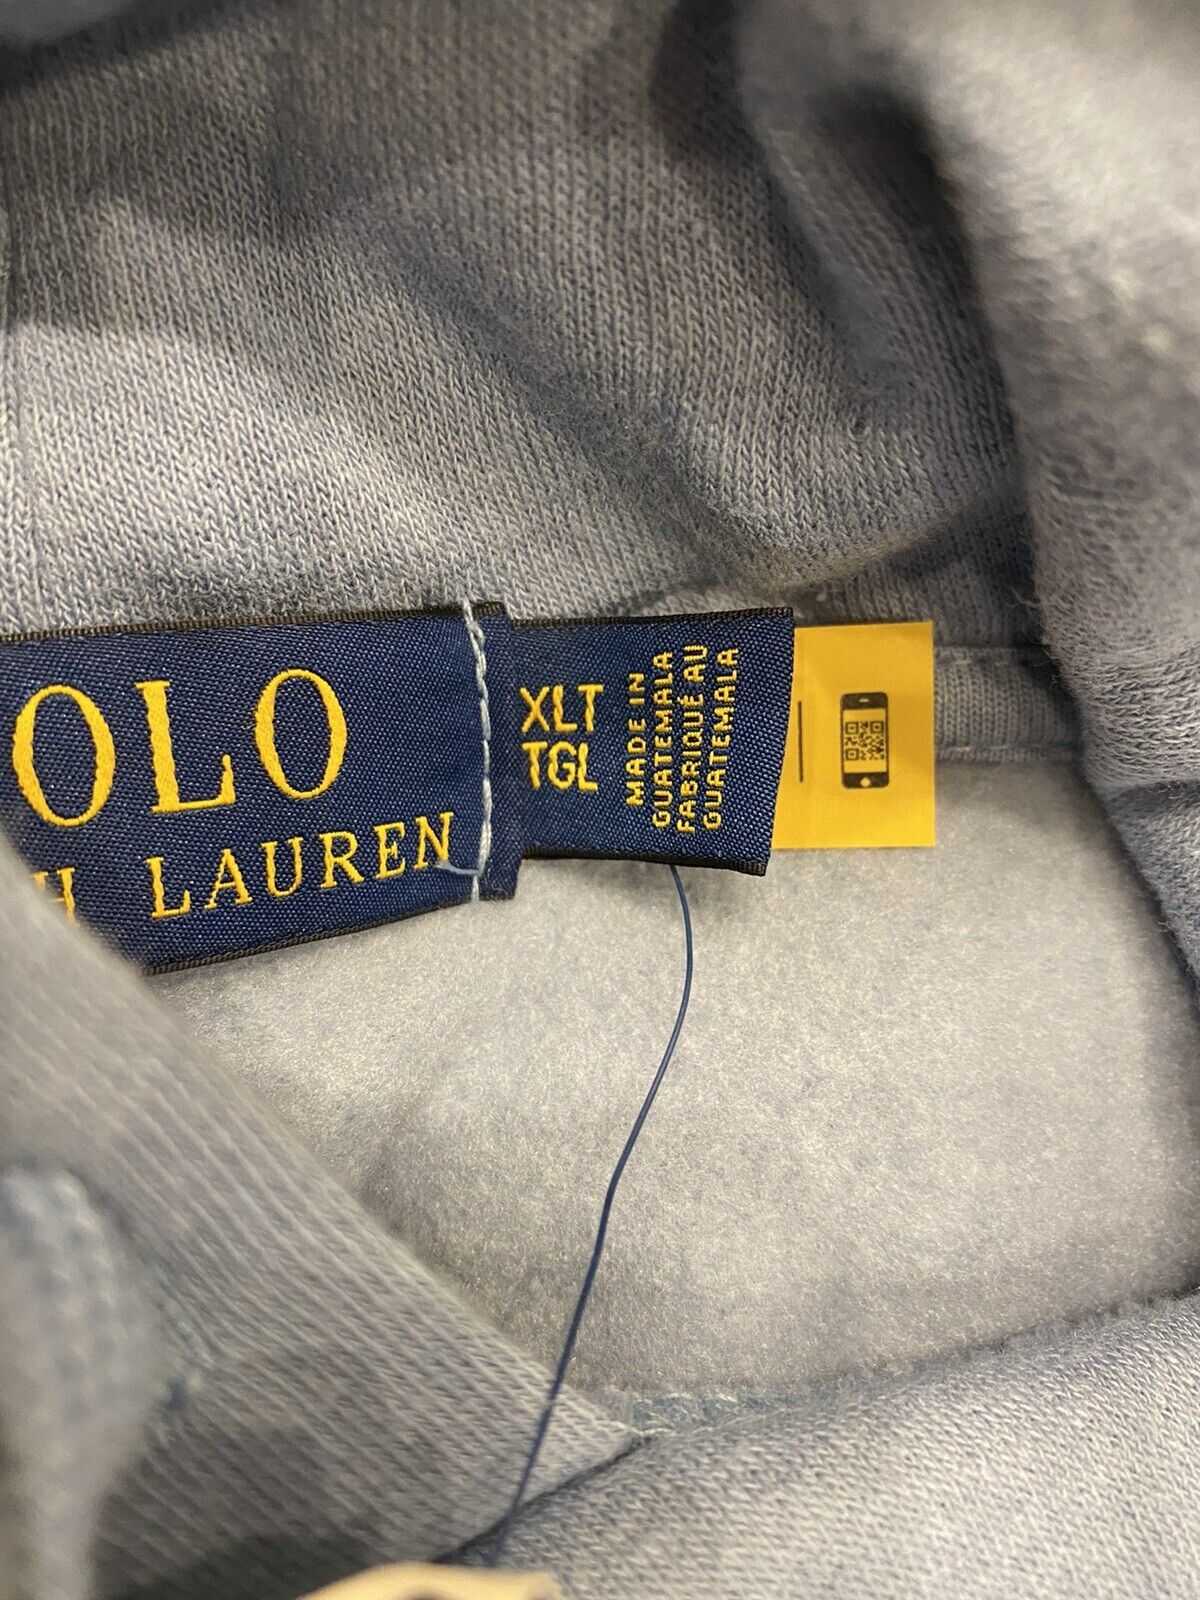 Neu für 188 $ Polo Ralph Lauren Langarm-Bärenpullover mit Kapuze Blau XLT/TGL 